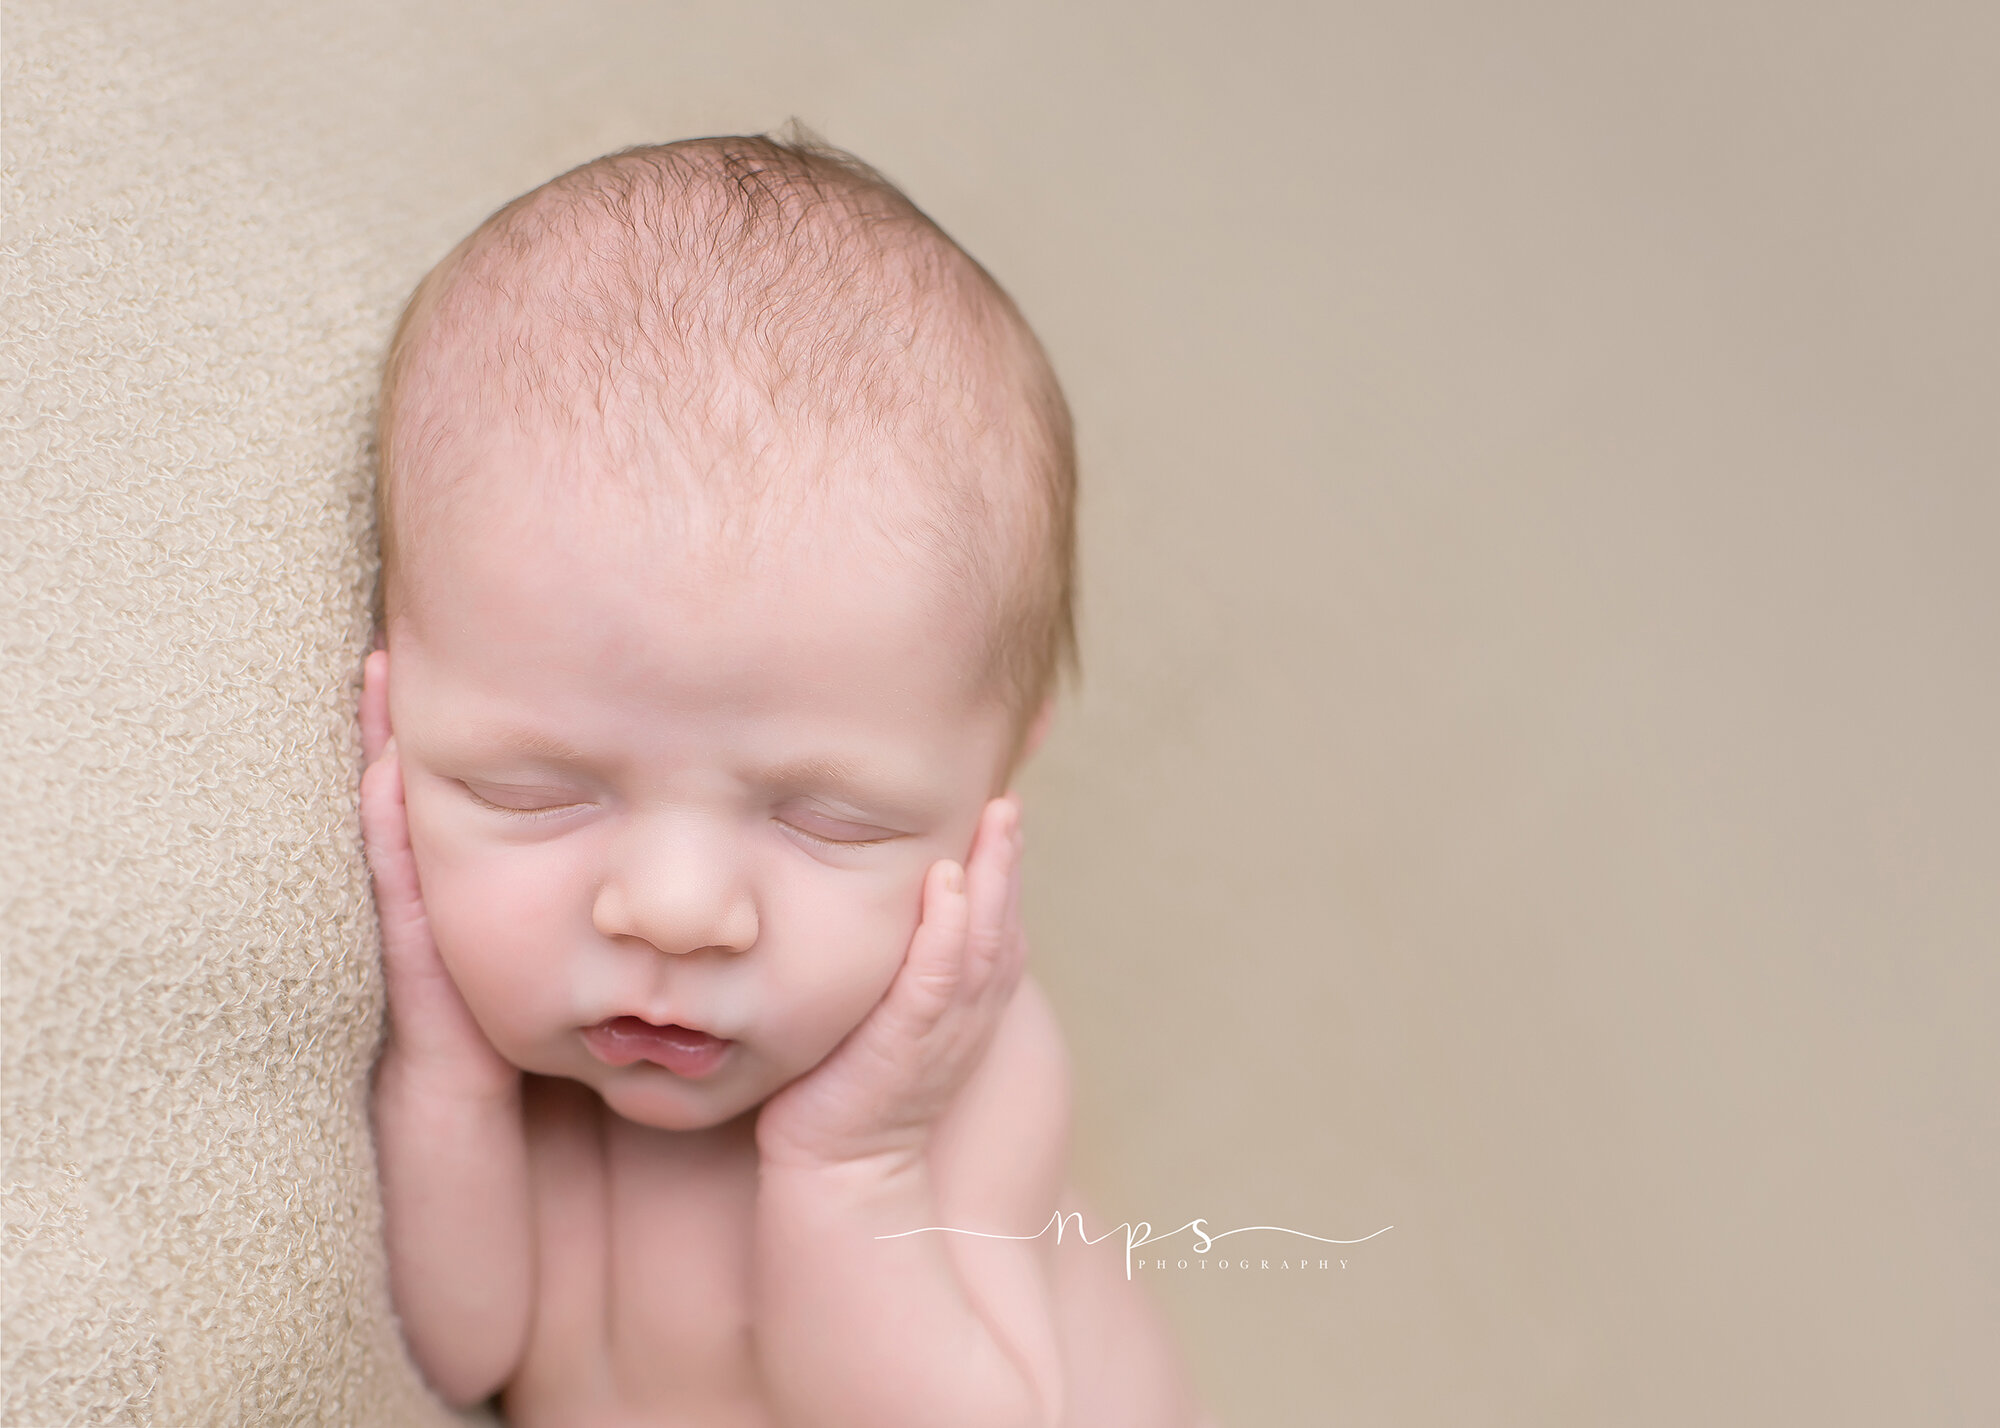 Baby Photographer Sanford - NPS Photography